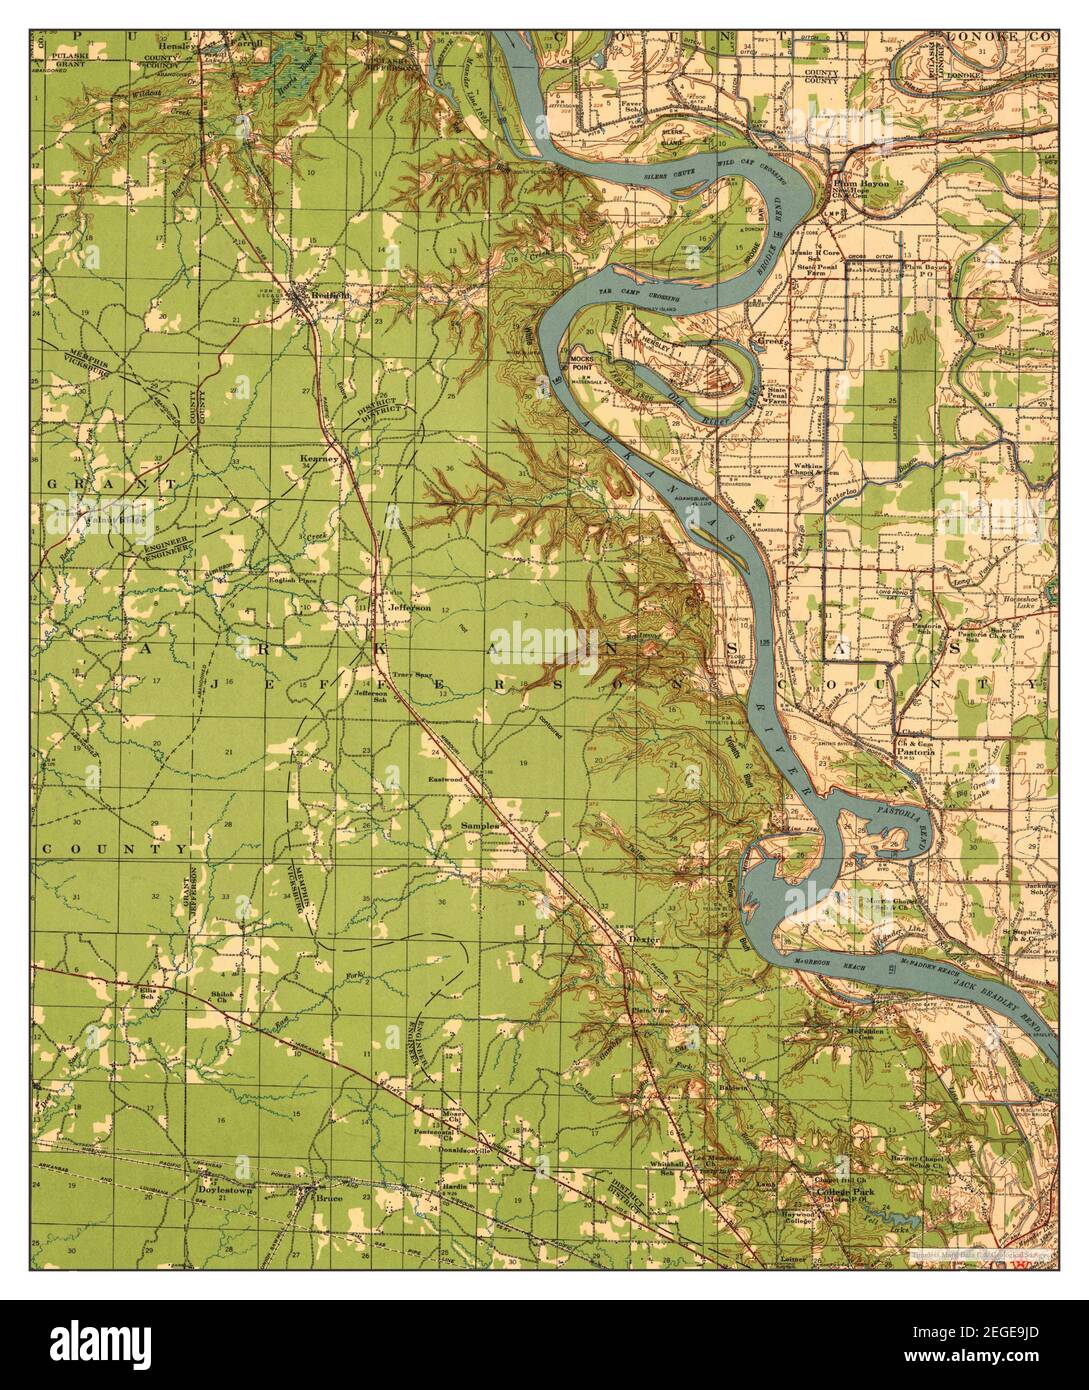 Pastoria, Arkansas, map 1935, 1:62500, United States of America by Timeless Maps, data U.S. Geological Survey Stock Photo